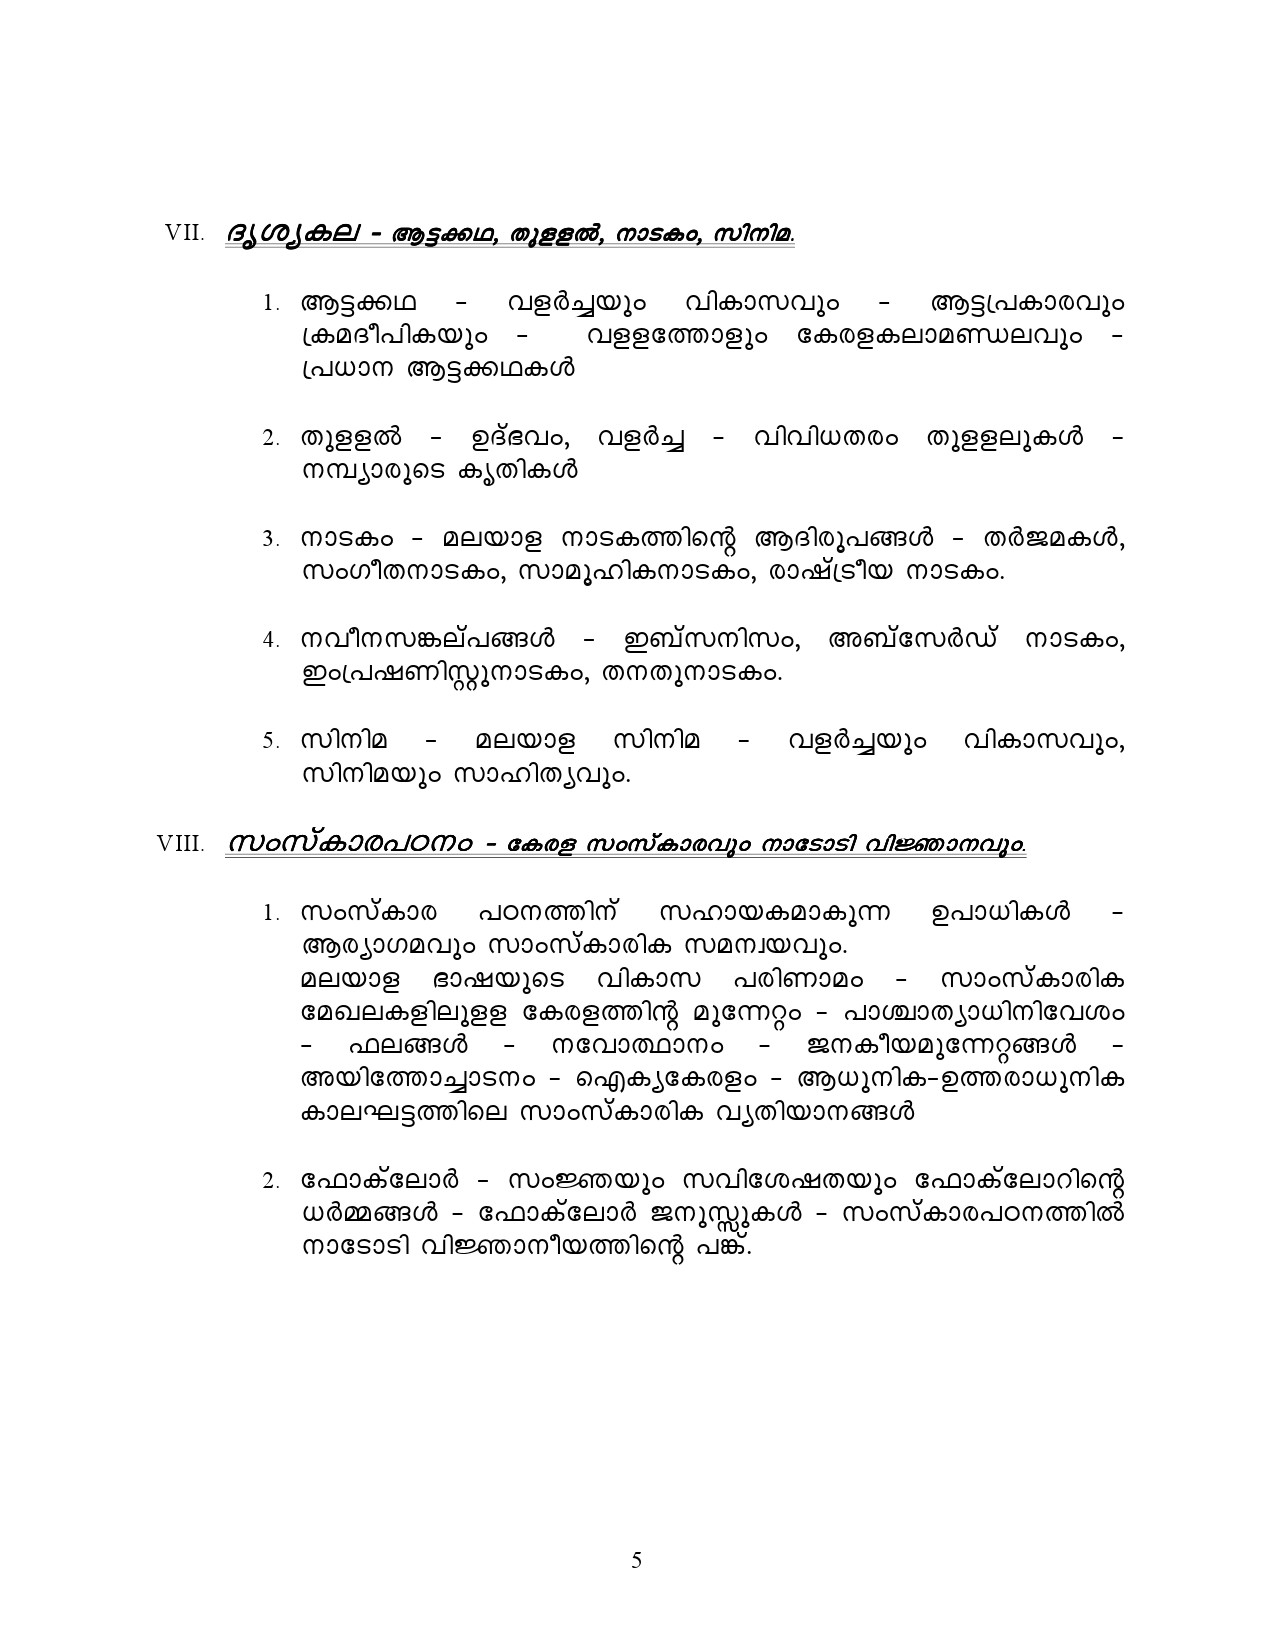 High School Assistant Malayalam Part A Kerala Examination Syllabus 2021 - Notification Image 5